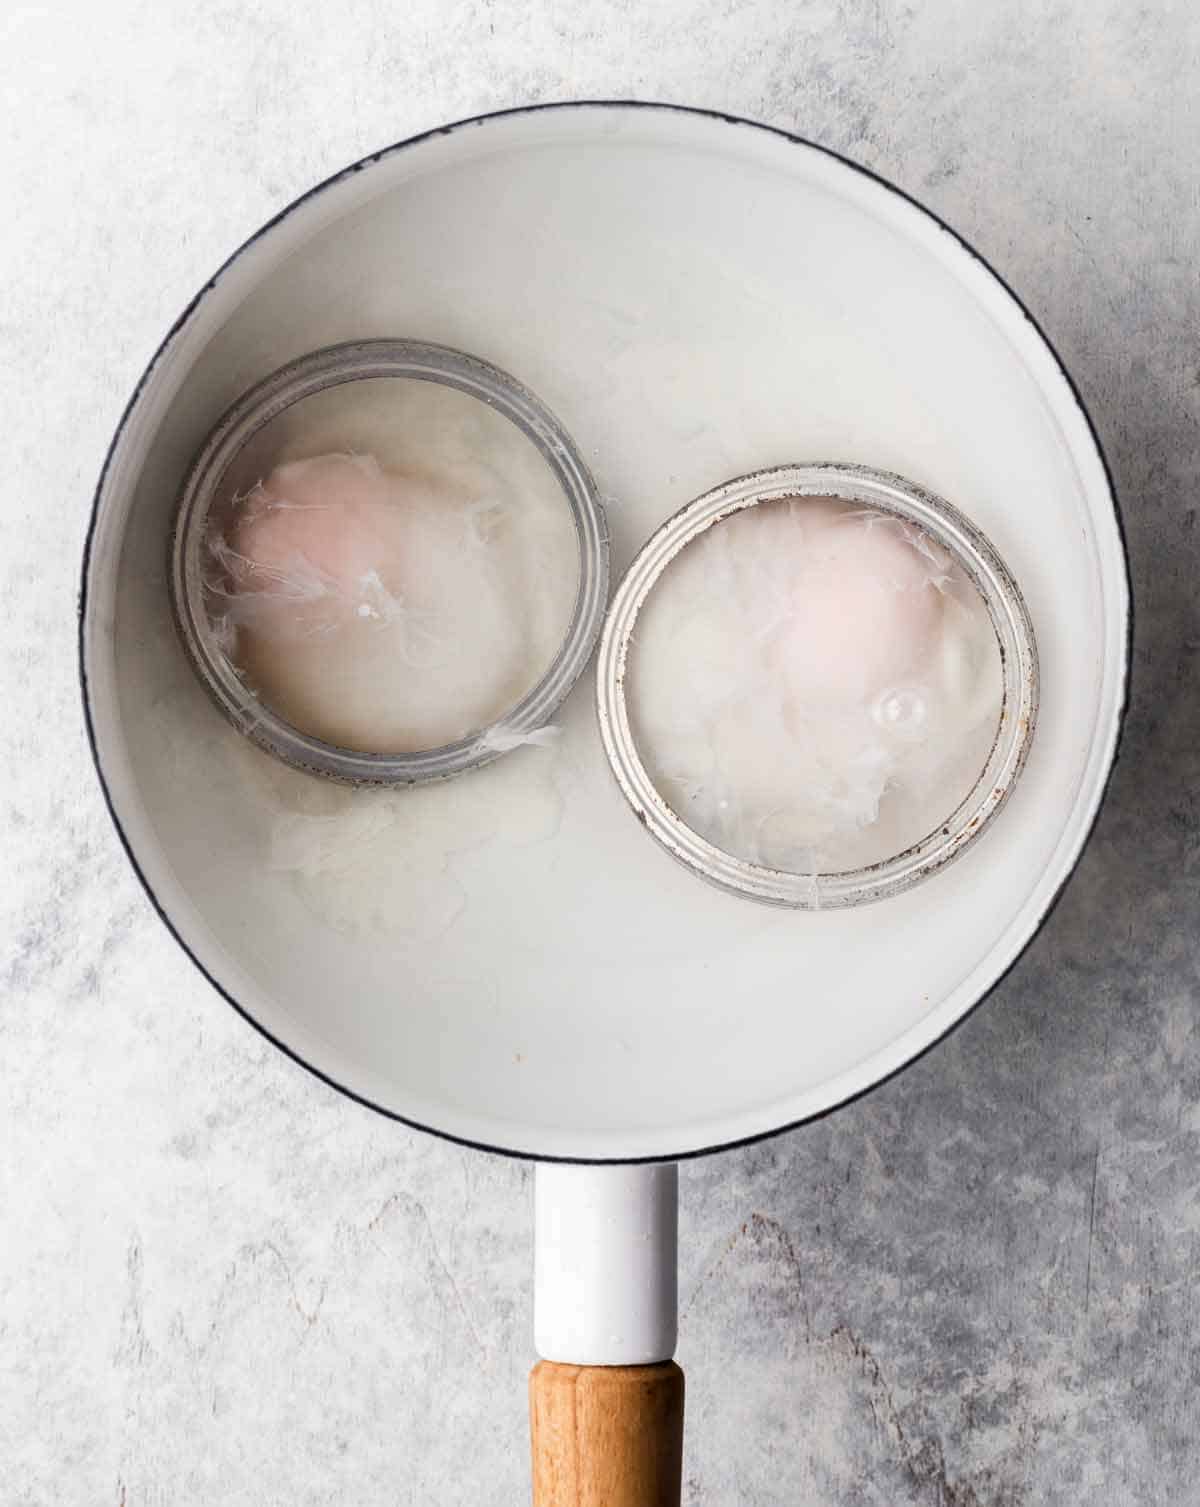 How to poach an egg using a mason jar lid